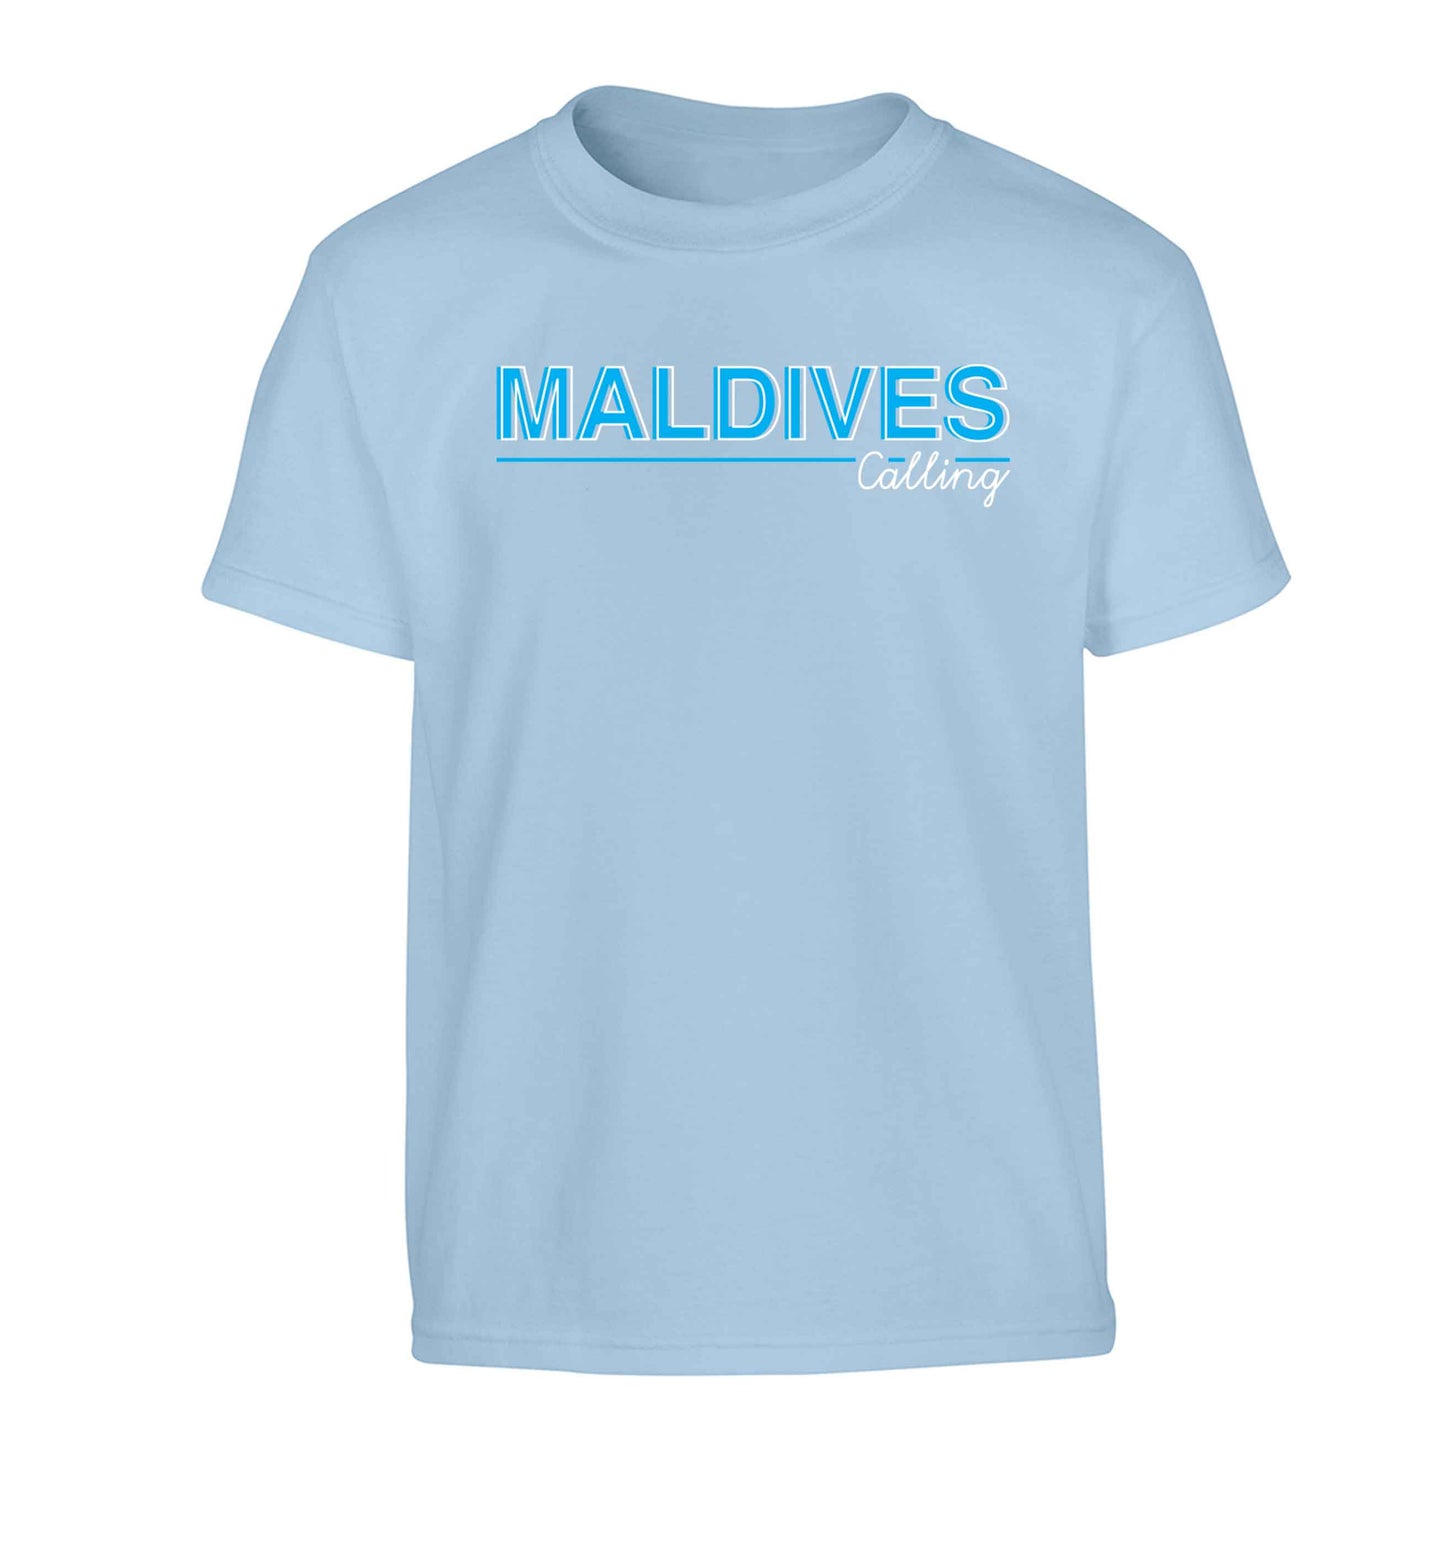 Maldives calling Children's light blue Tshirt 12-13 Years